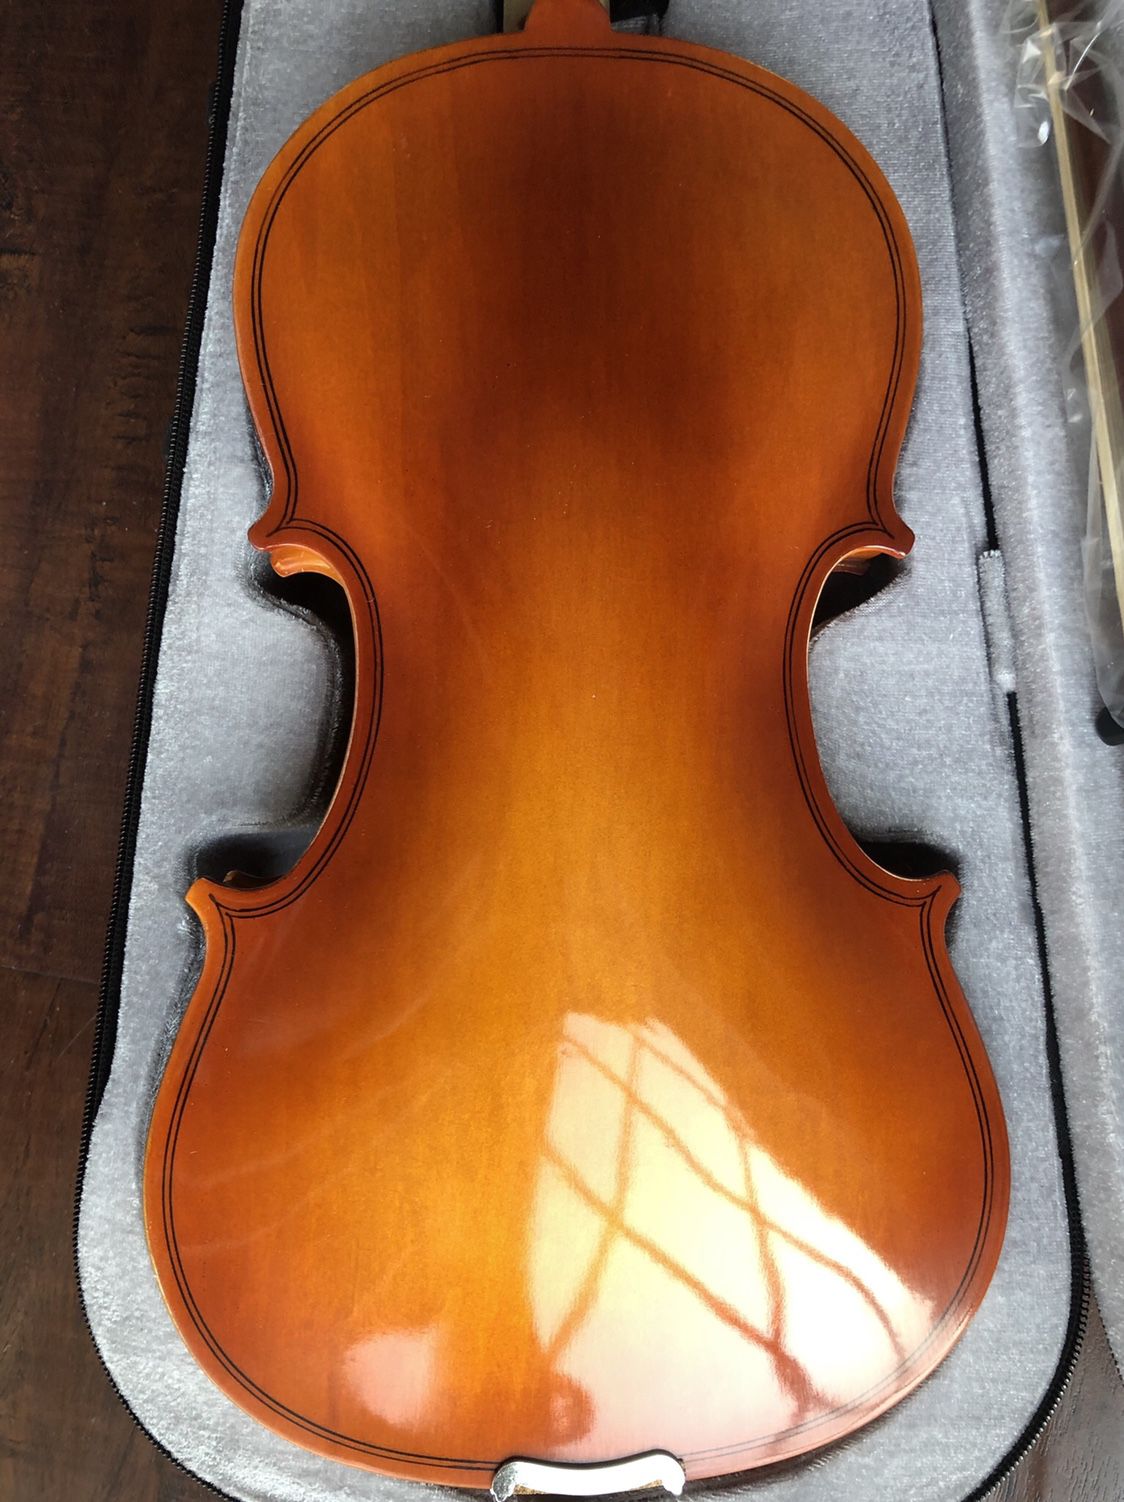 New Violin Adult Size $60, Kids Violin $50